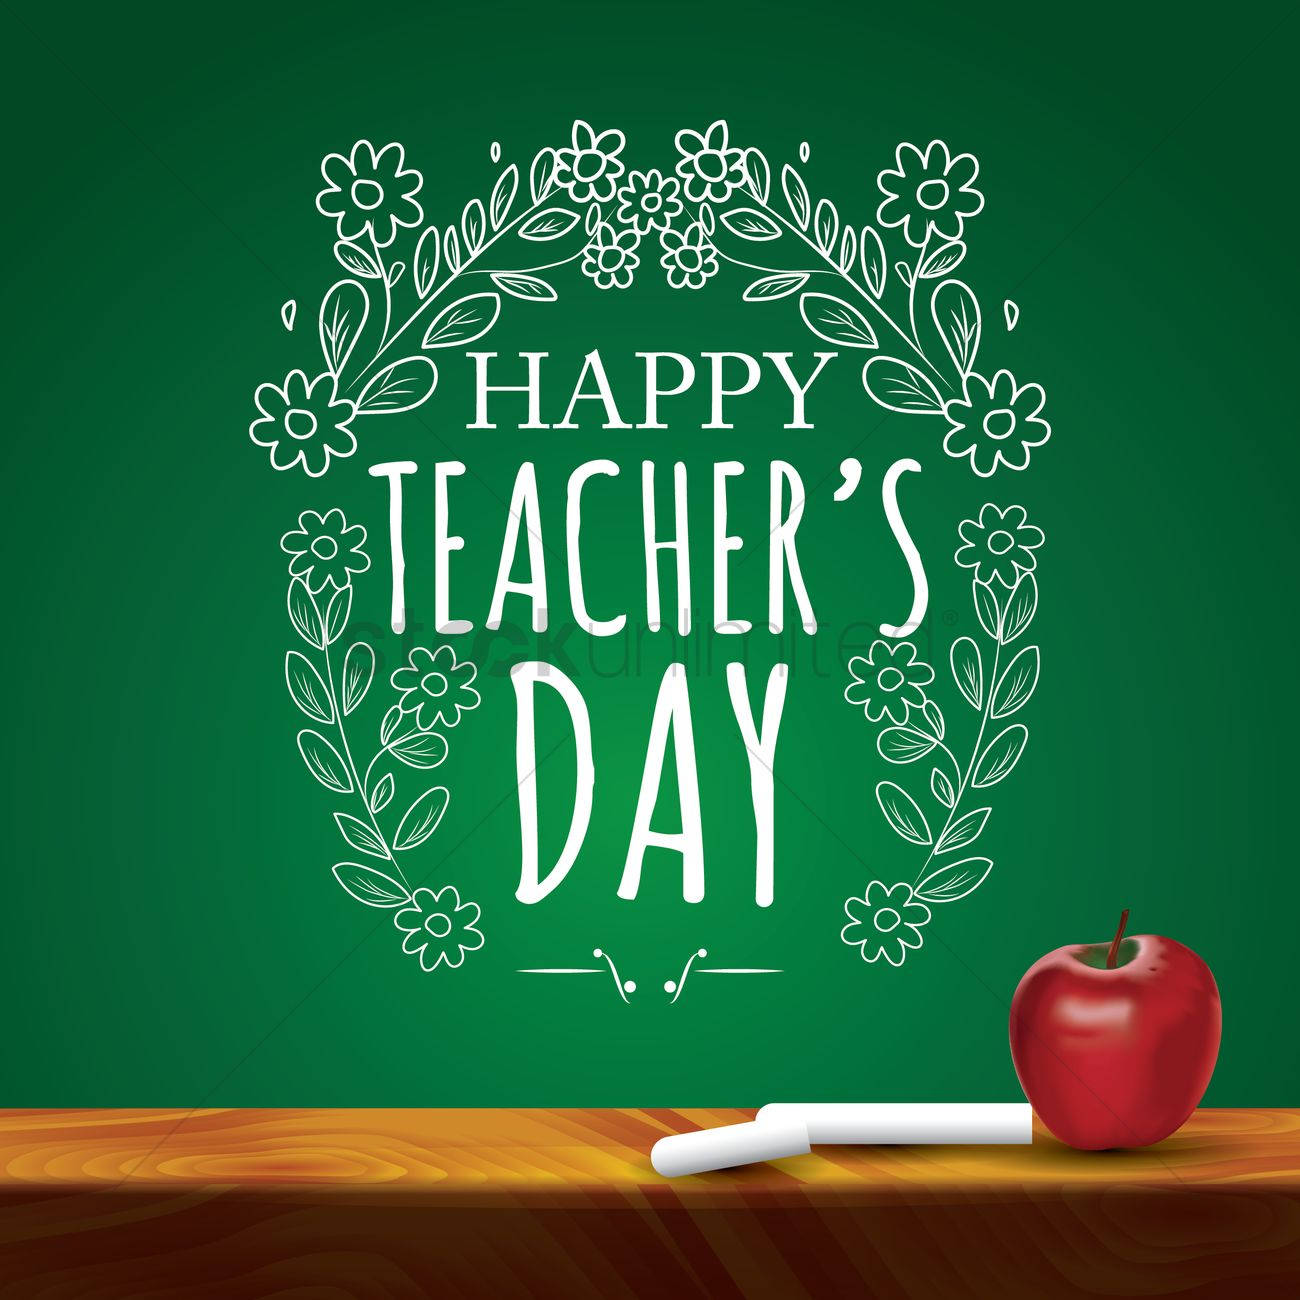 Happy Teachers' Day Chalkboard Background